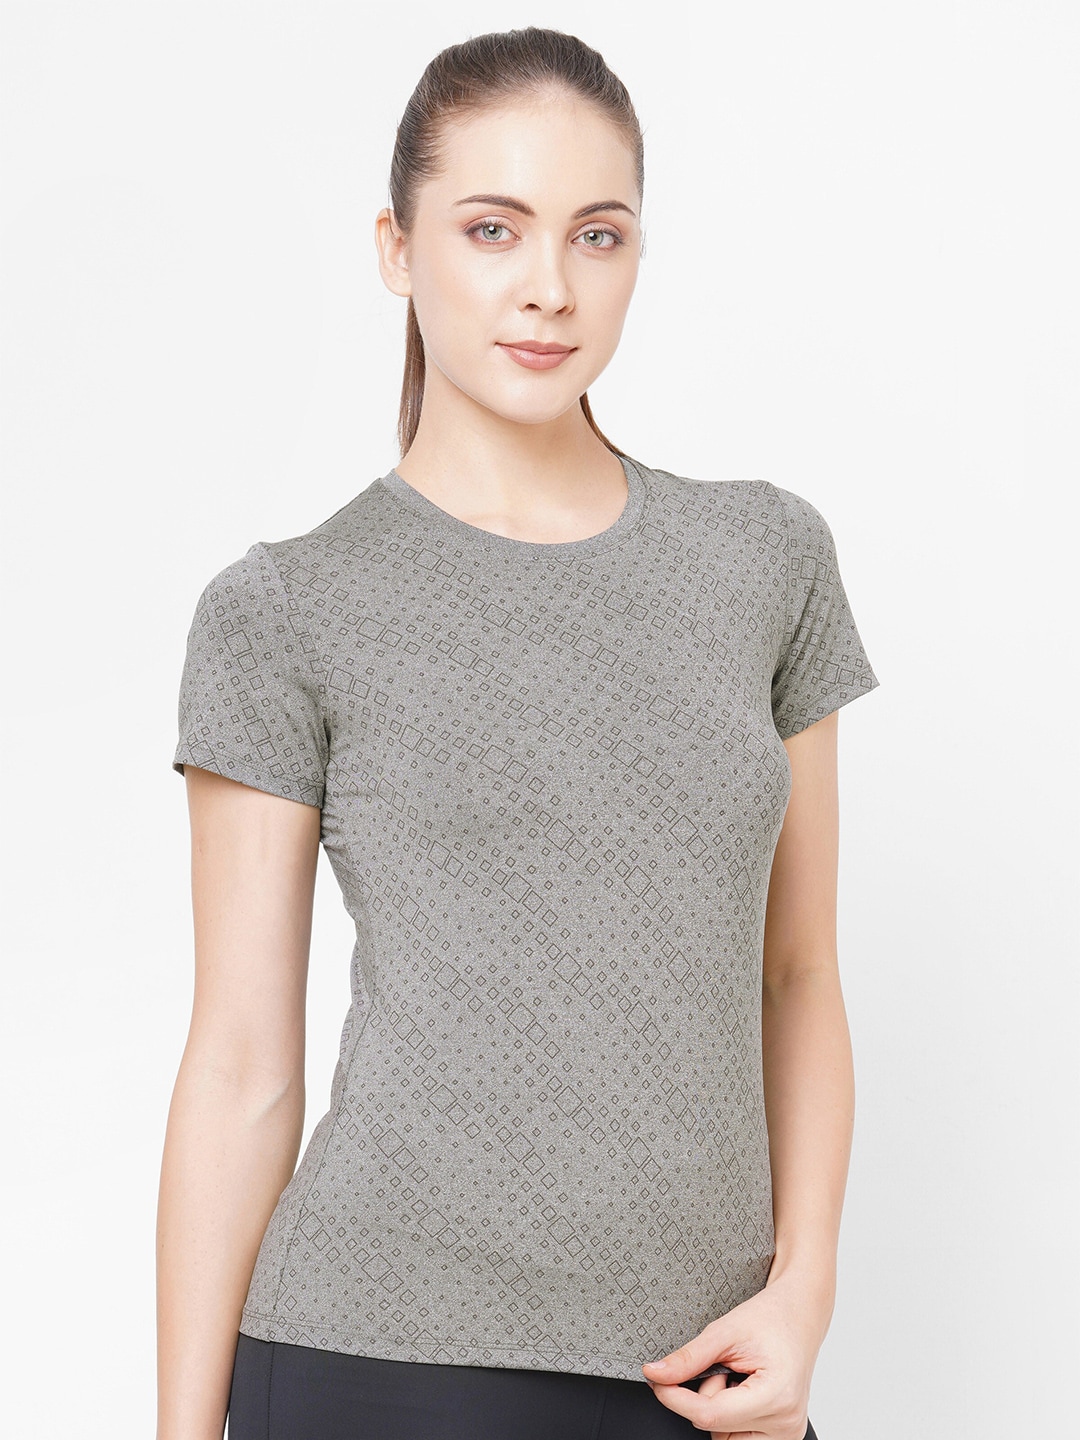 LAASA SPORTS Women Grey Melange Slim Fit Sports T-shirt Price in India